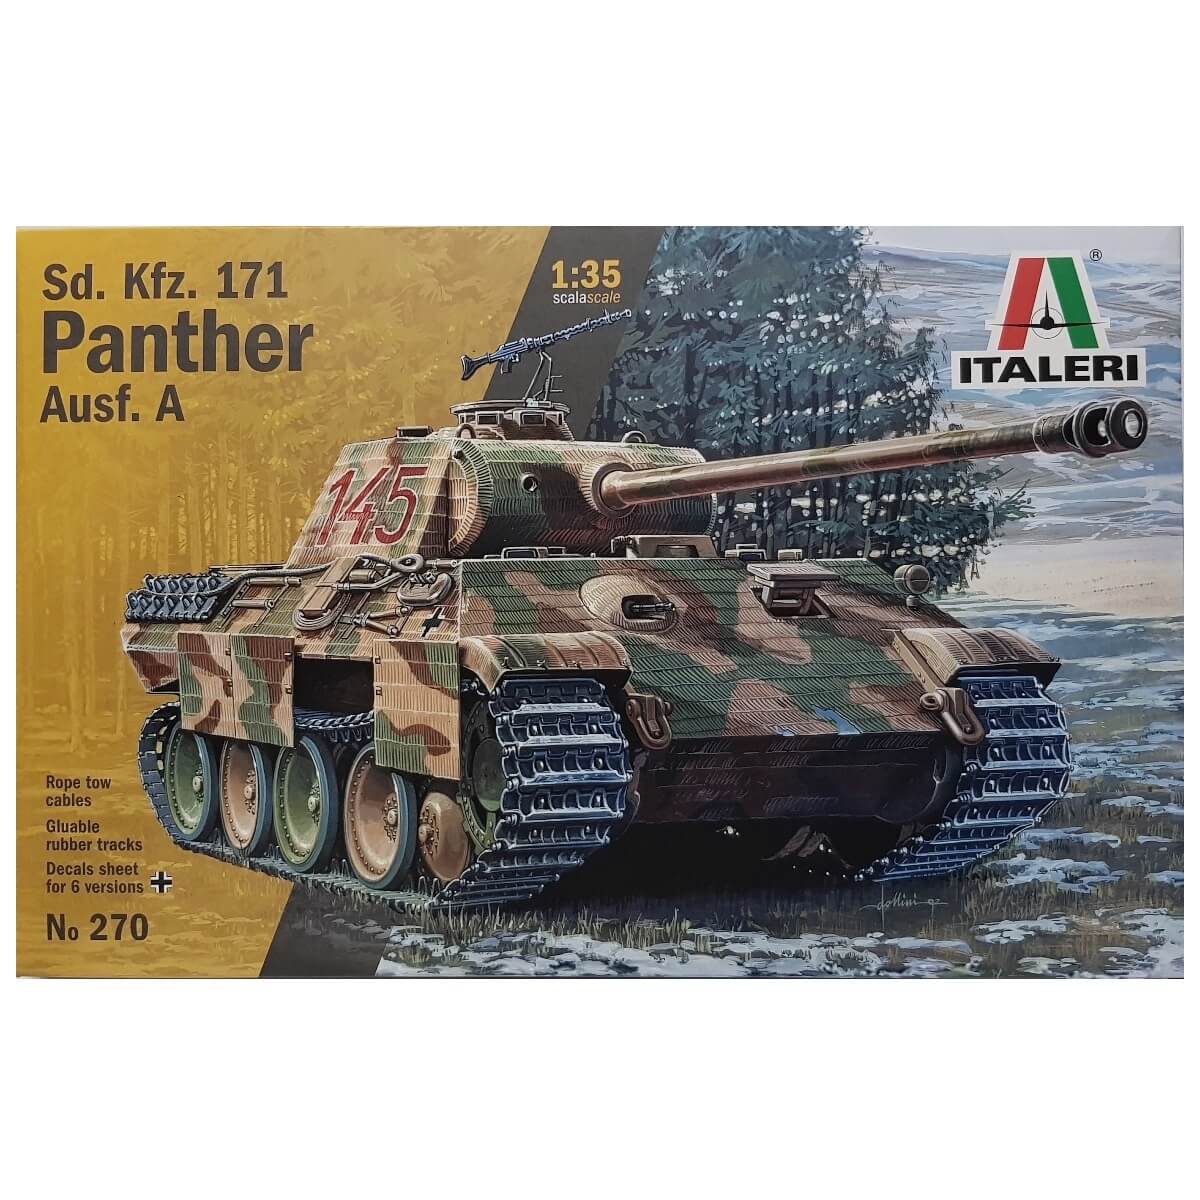 1:35 Sd.Kfz. 171 Panther Ausf. A - ITALERI